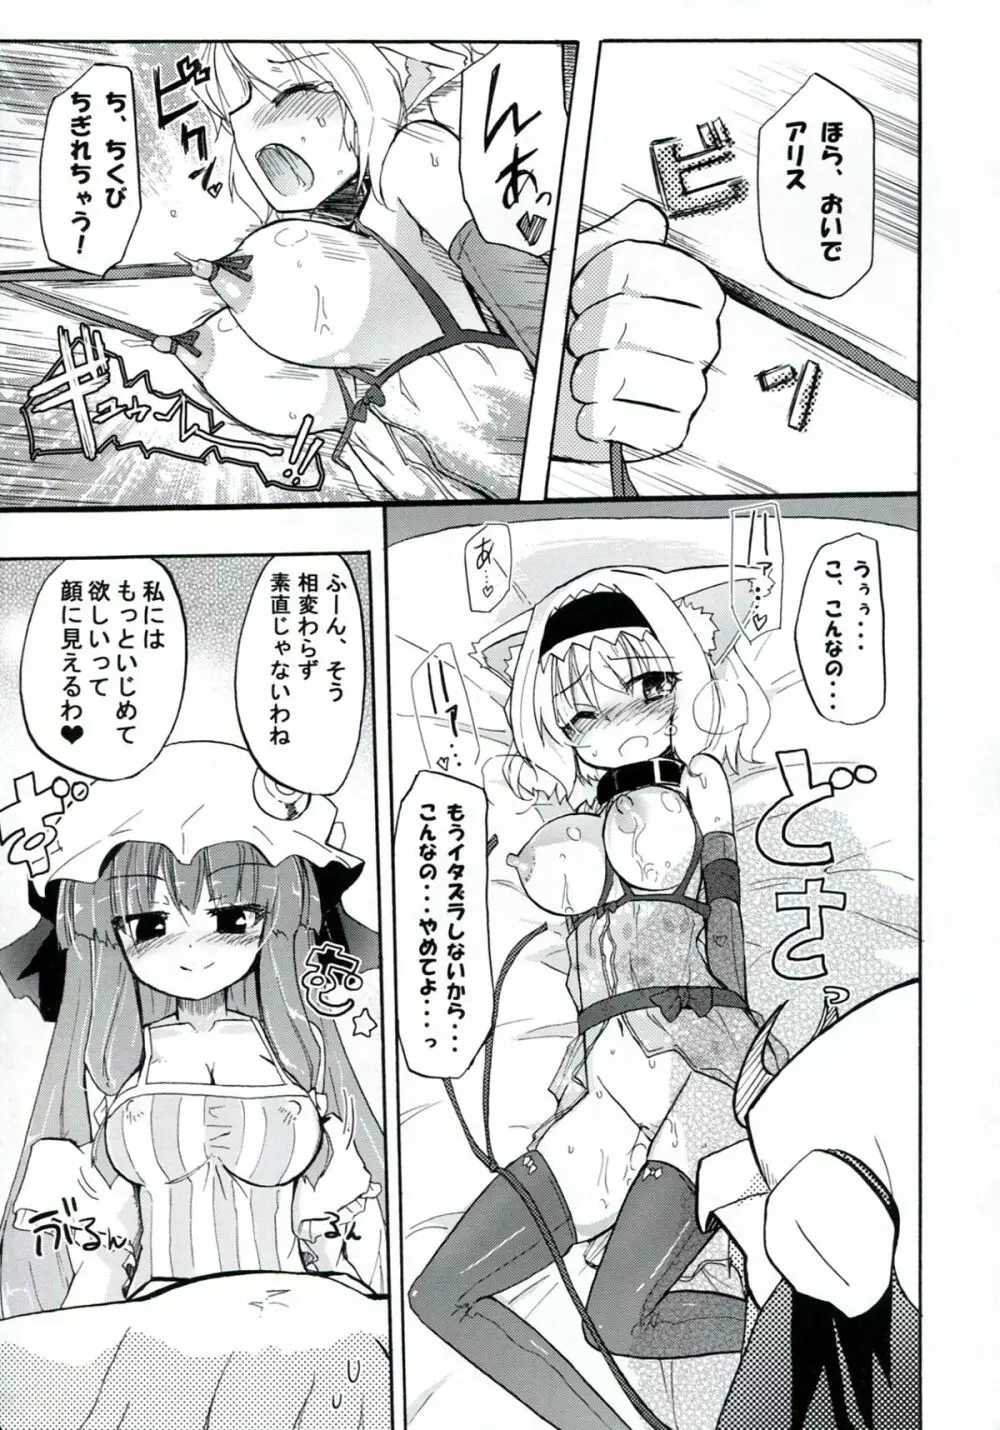 Homuraya Milk ★ Collection 2 - page17